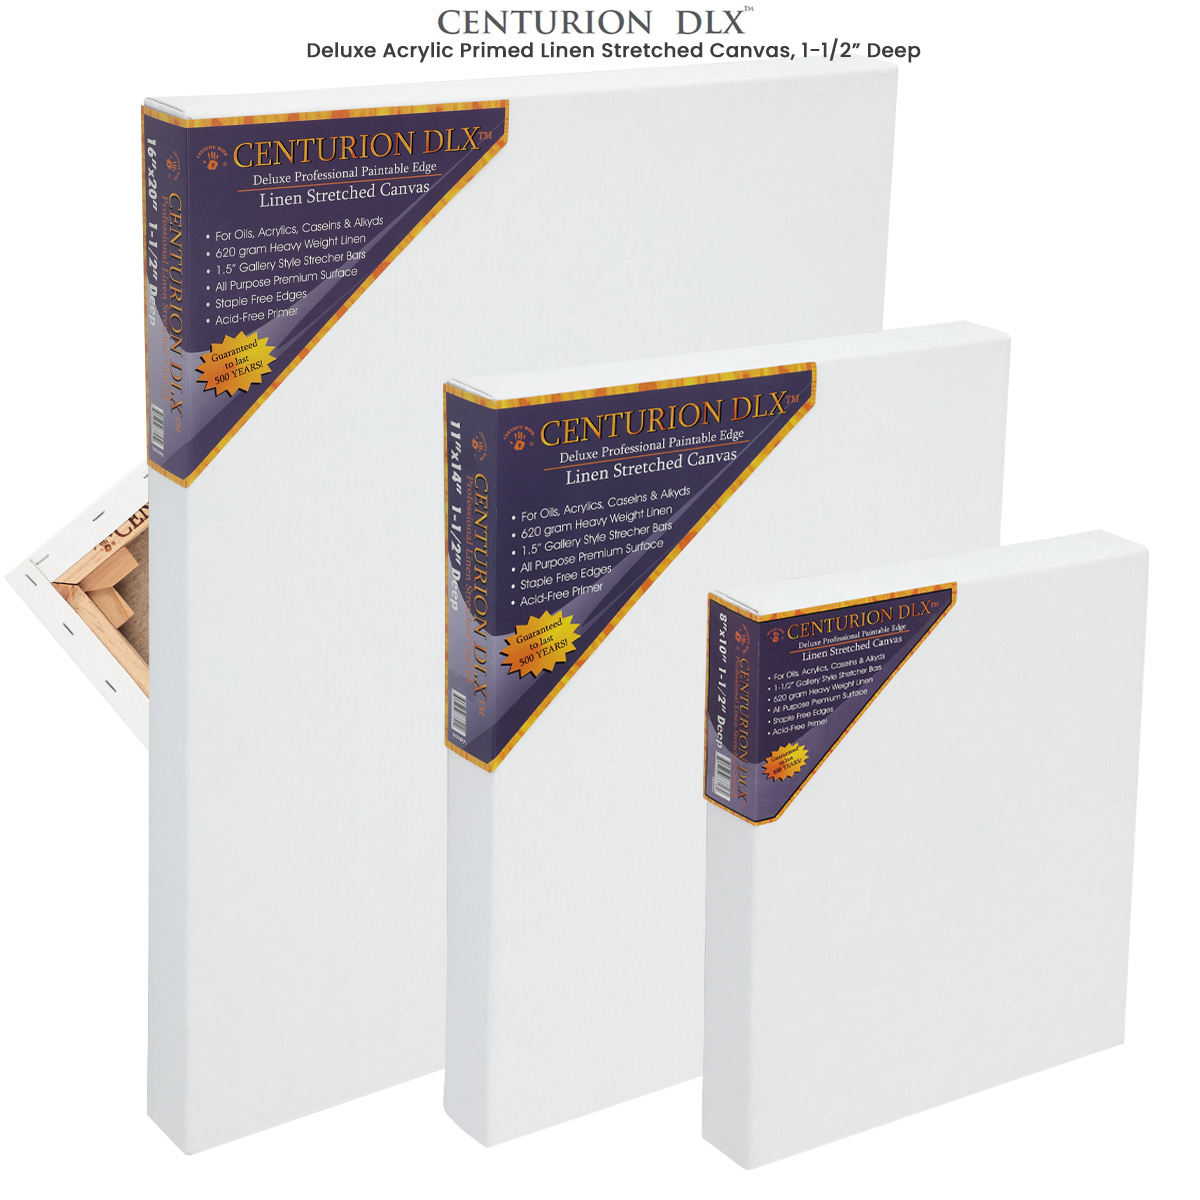  Centurion DLX Universal Acrylic Primed Linen Stretched Canvas 1-1/2"